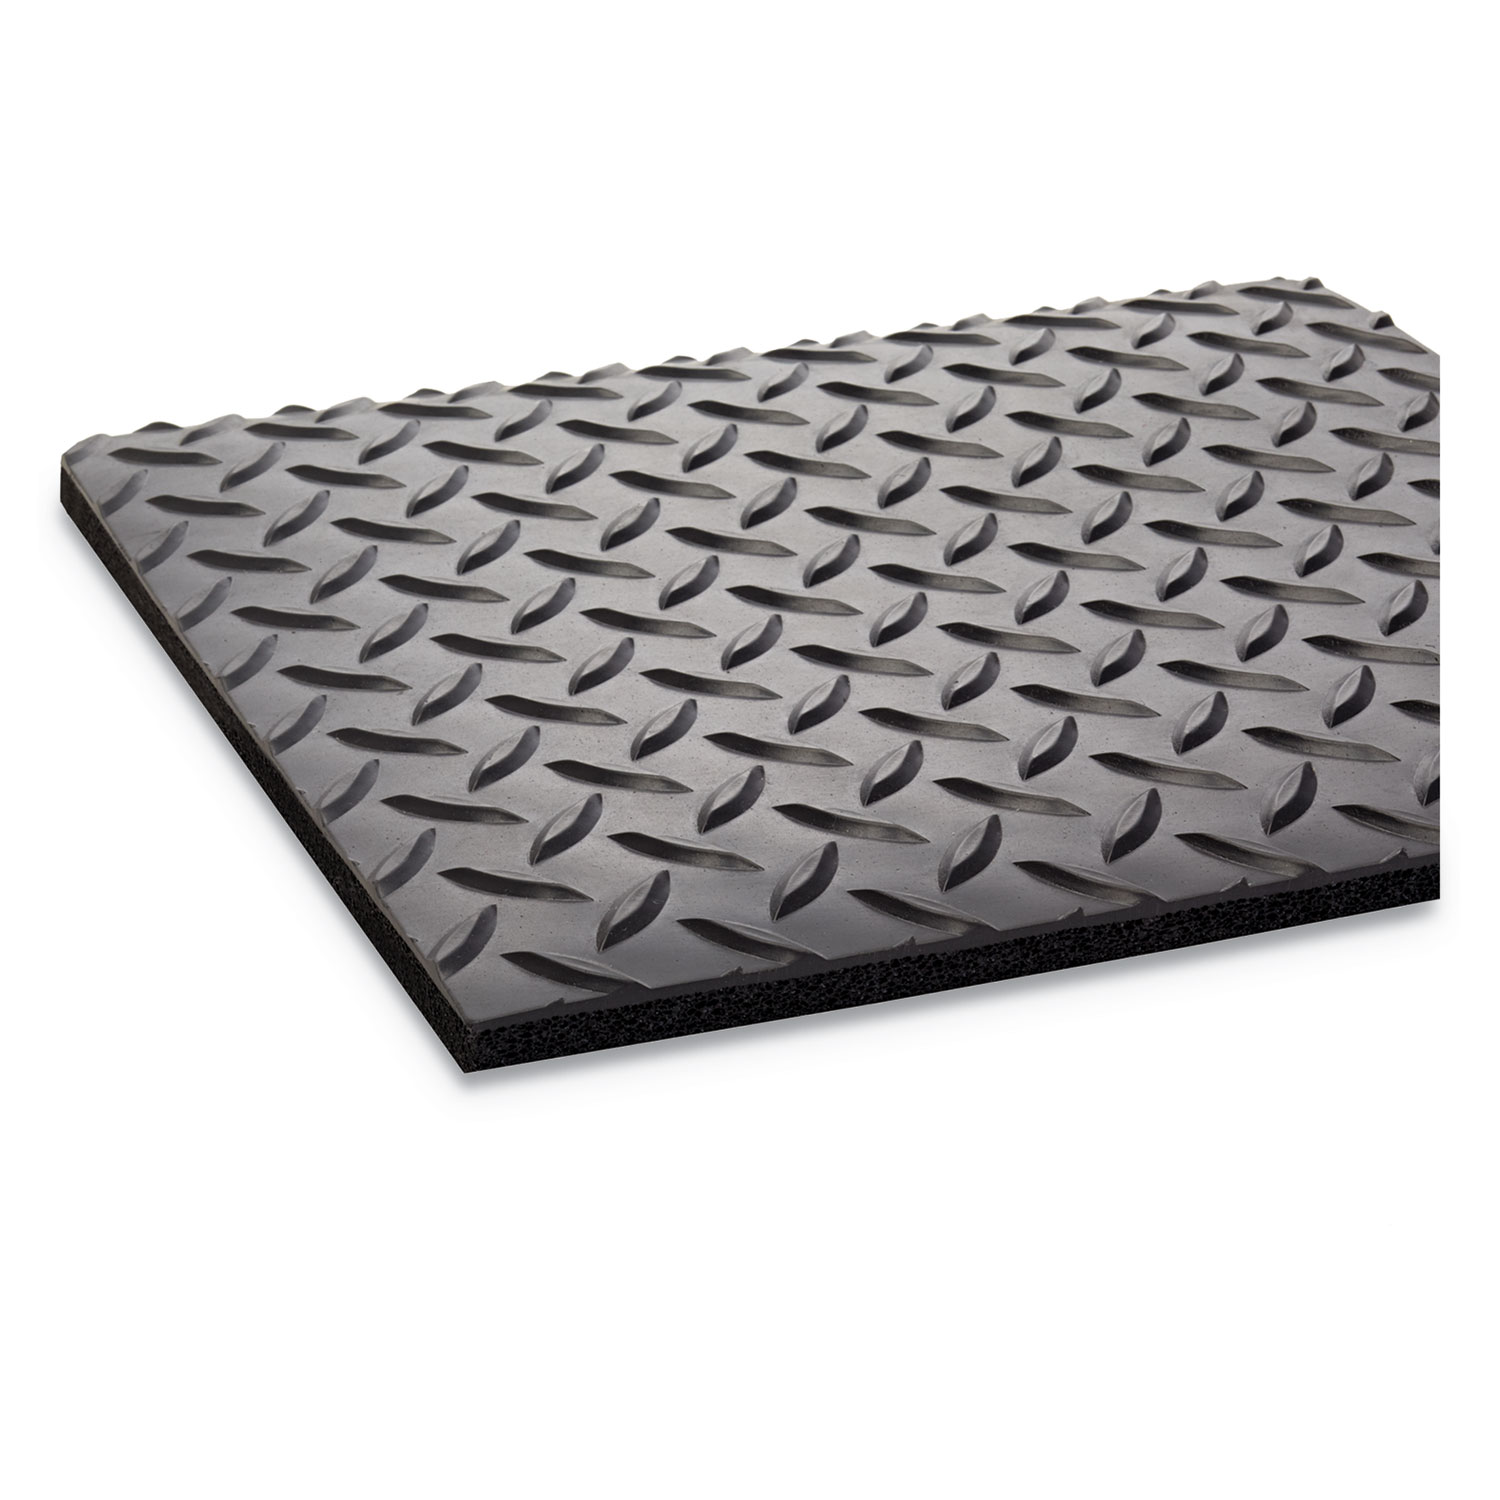 Crown Matting 2' x 75' Industrial Deck Plate Ultra Anti-Fatigue Ergonomic Dry Mats Black/Yellow